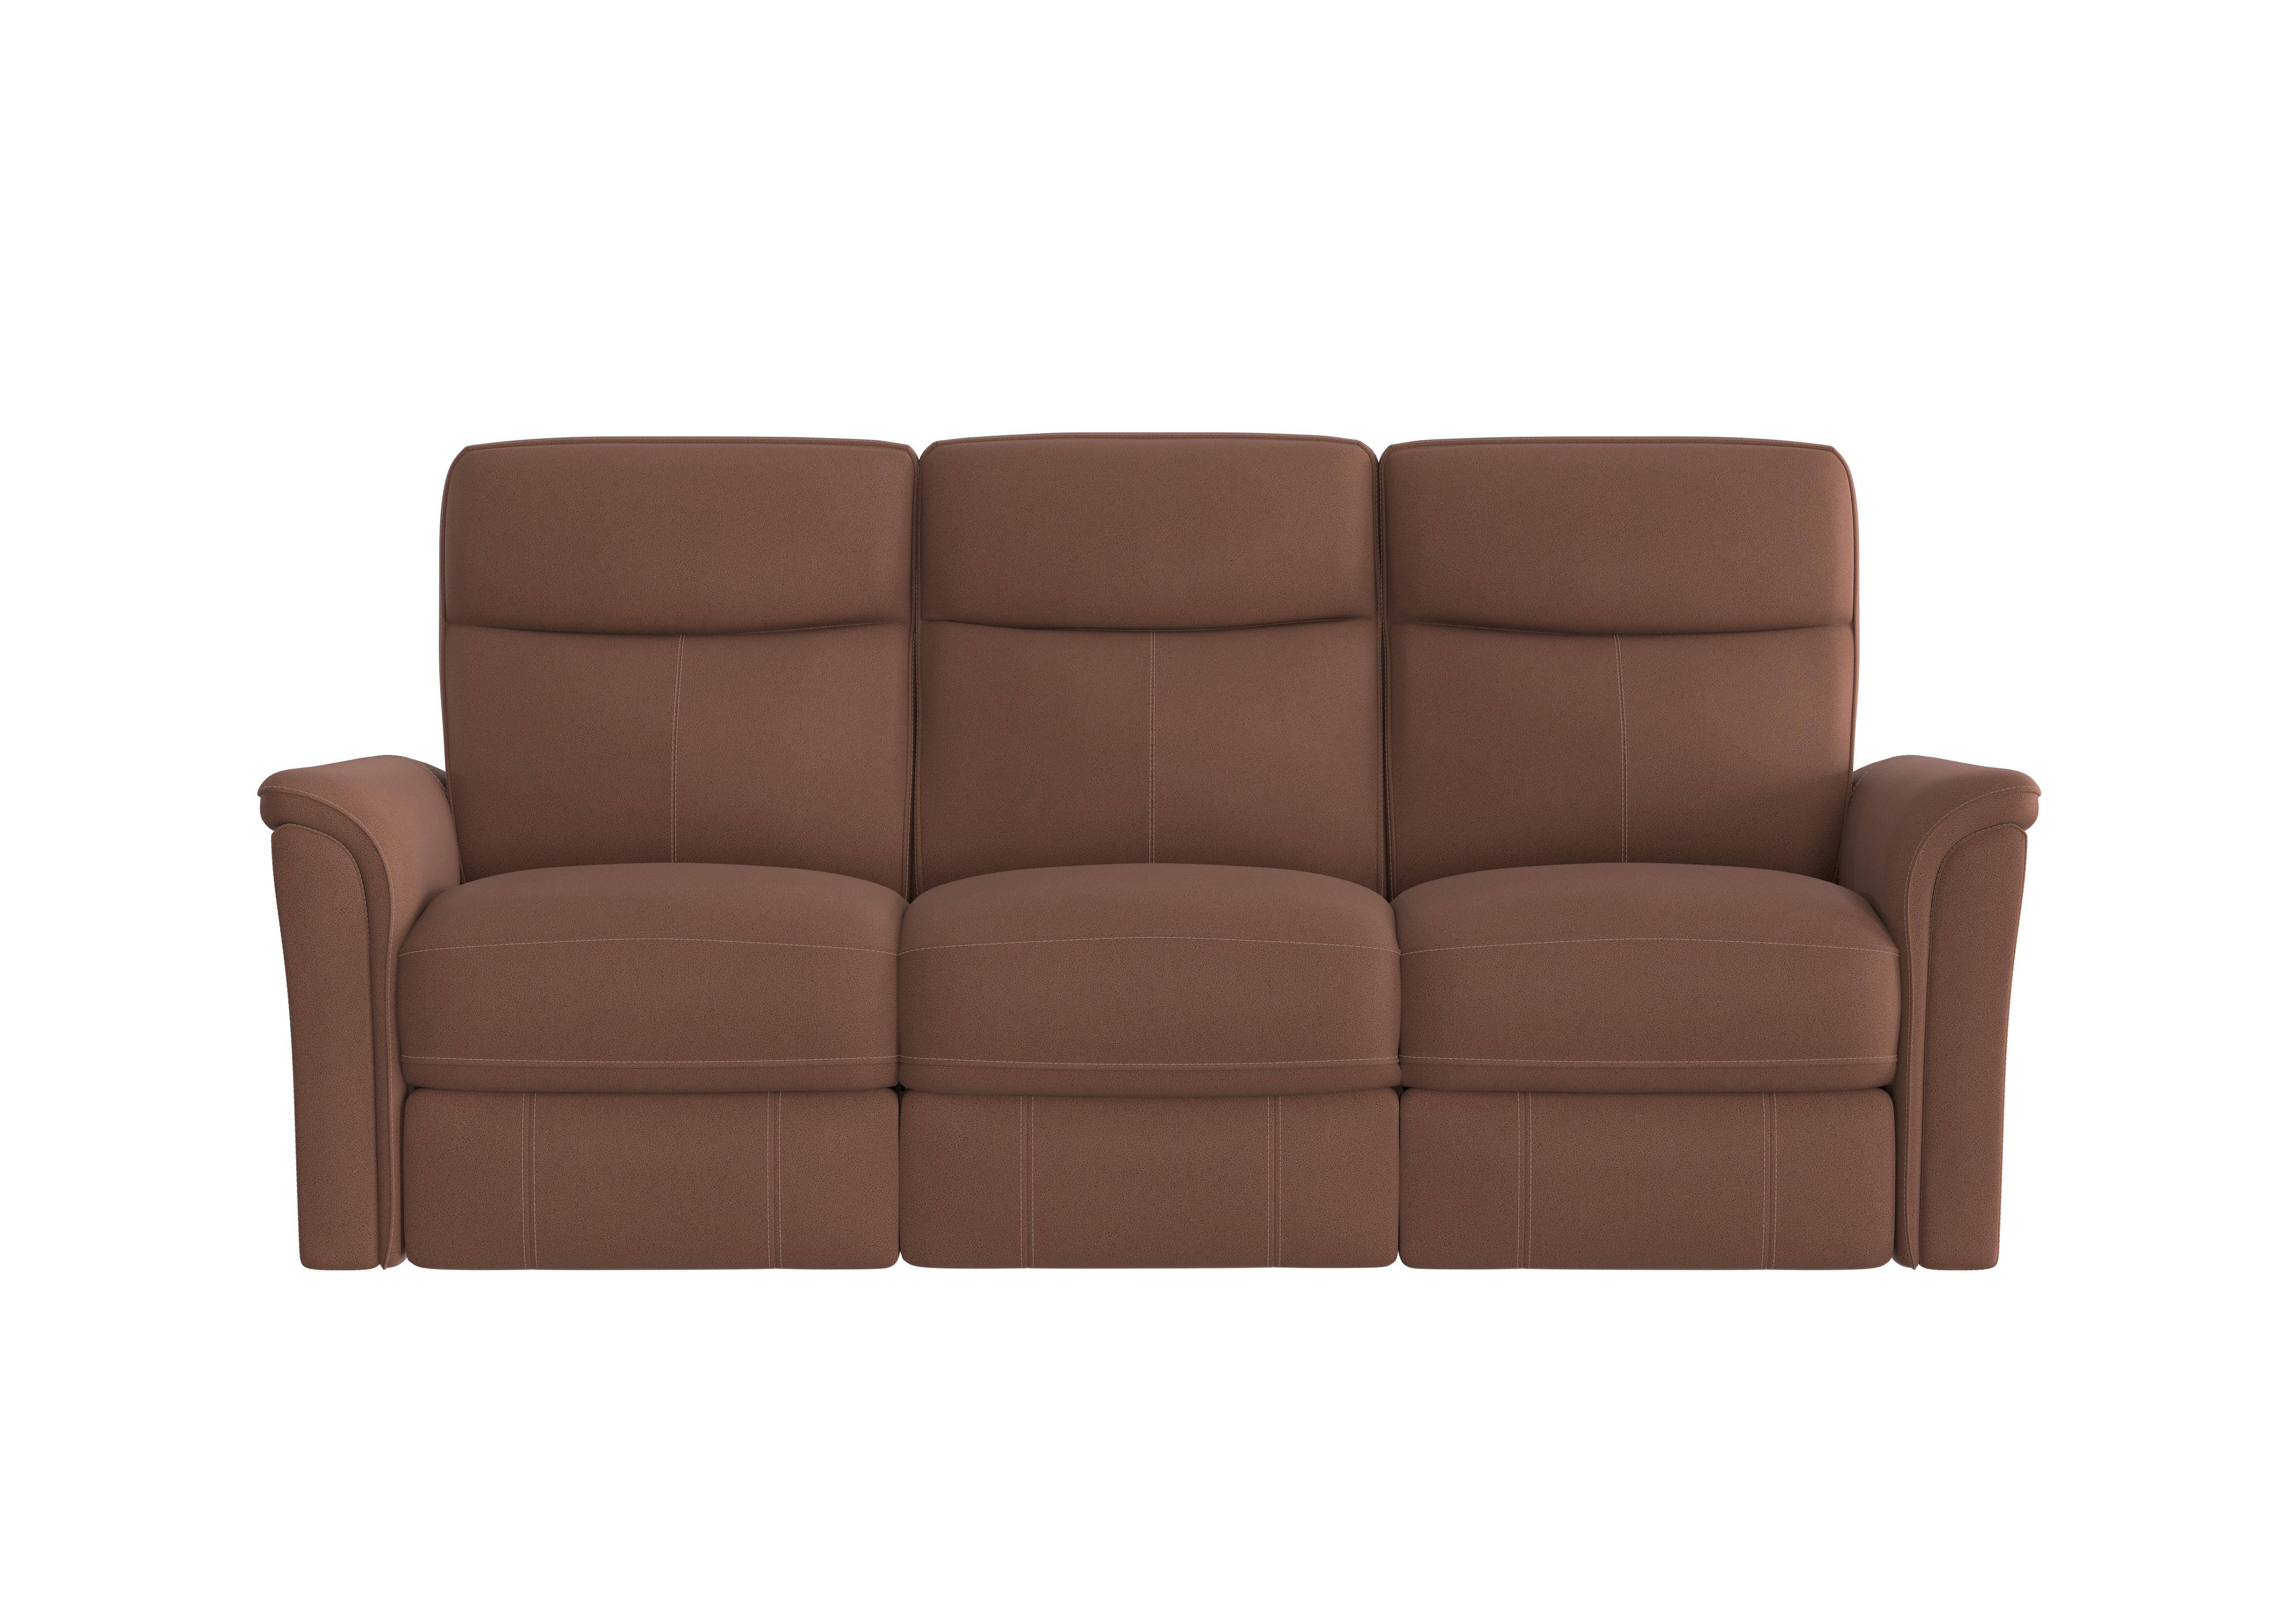 Piccolo 3 Seater Fabric Sofa in Bfa-Blj-R05 Hazelnut on Furniture Village